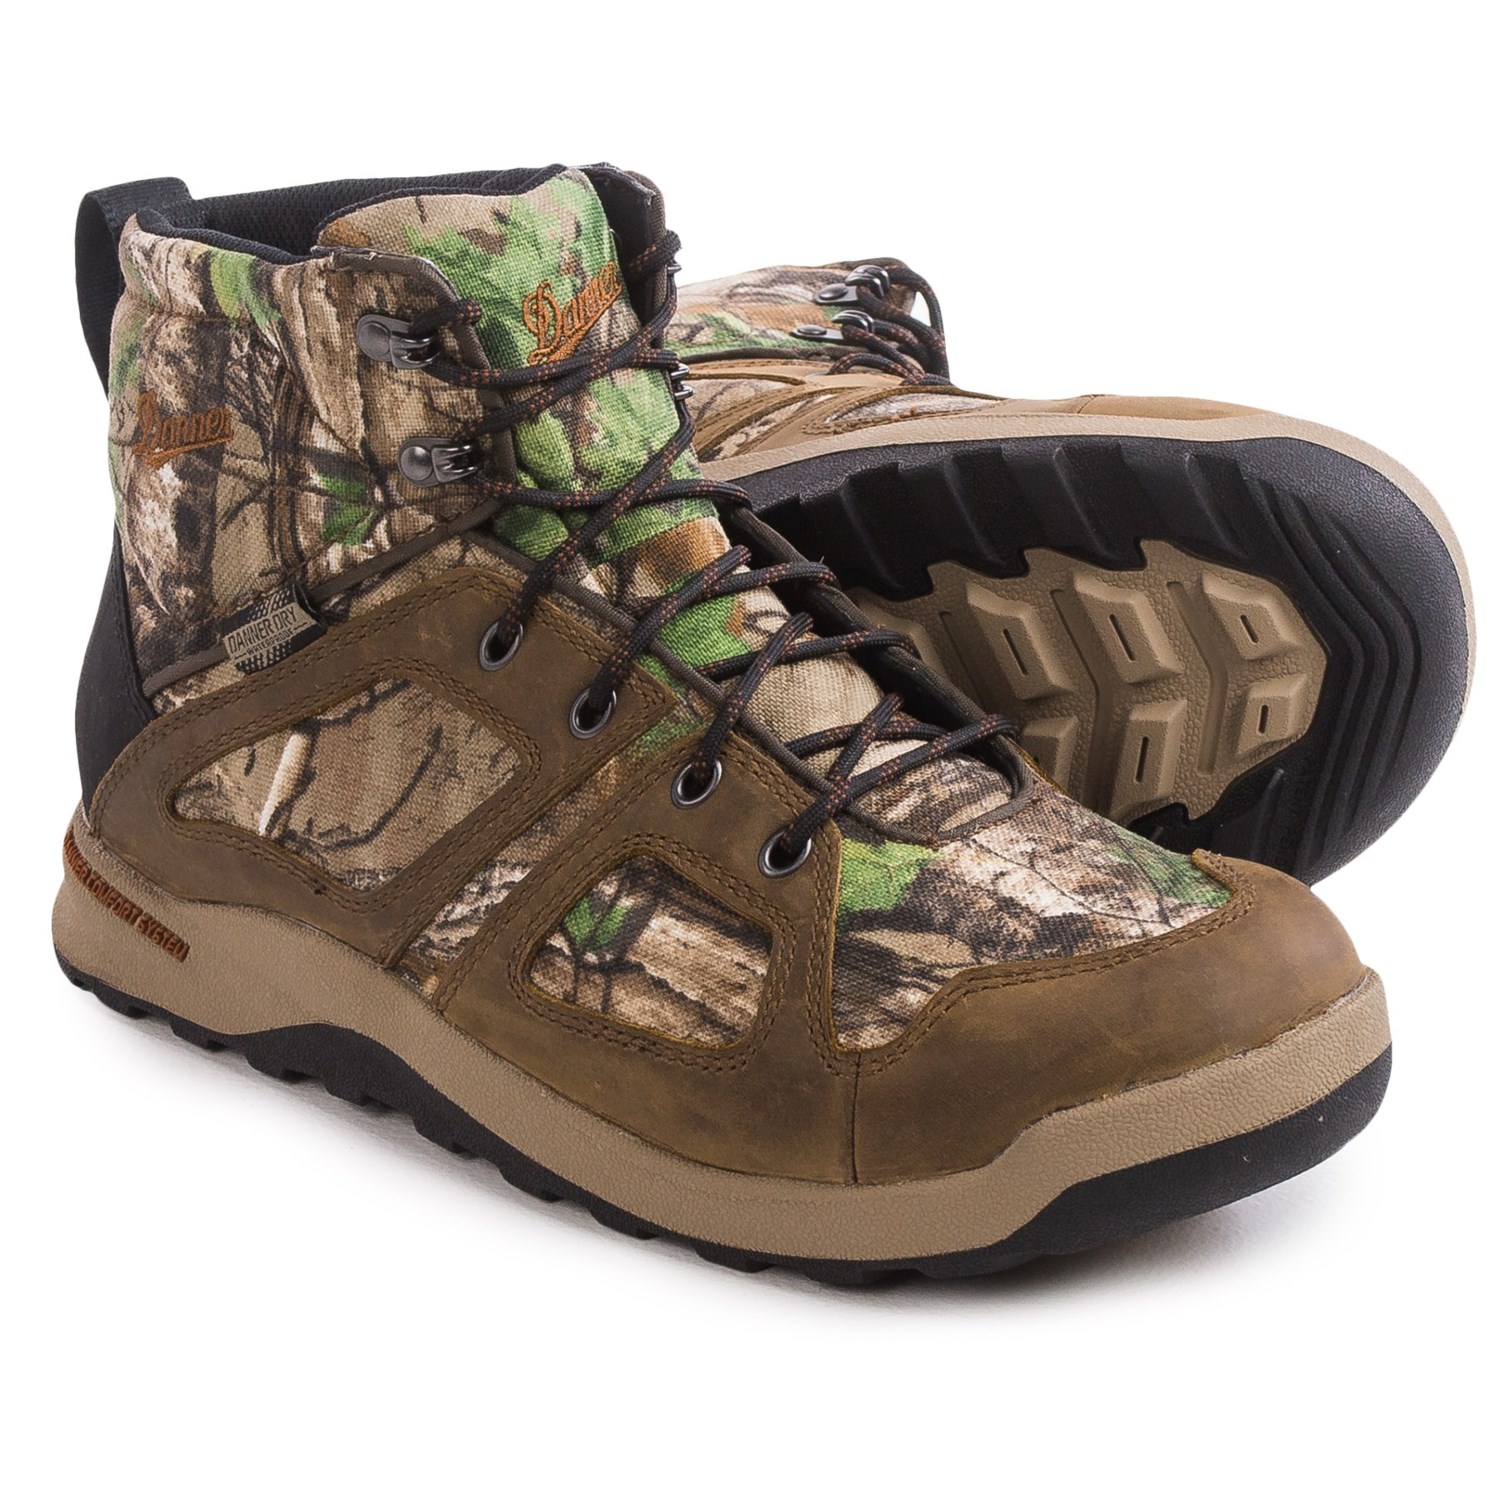 Danner 6” Steadfast Hunting Boots – Waterproof (For Men)